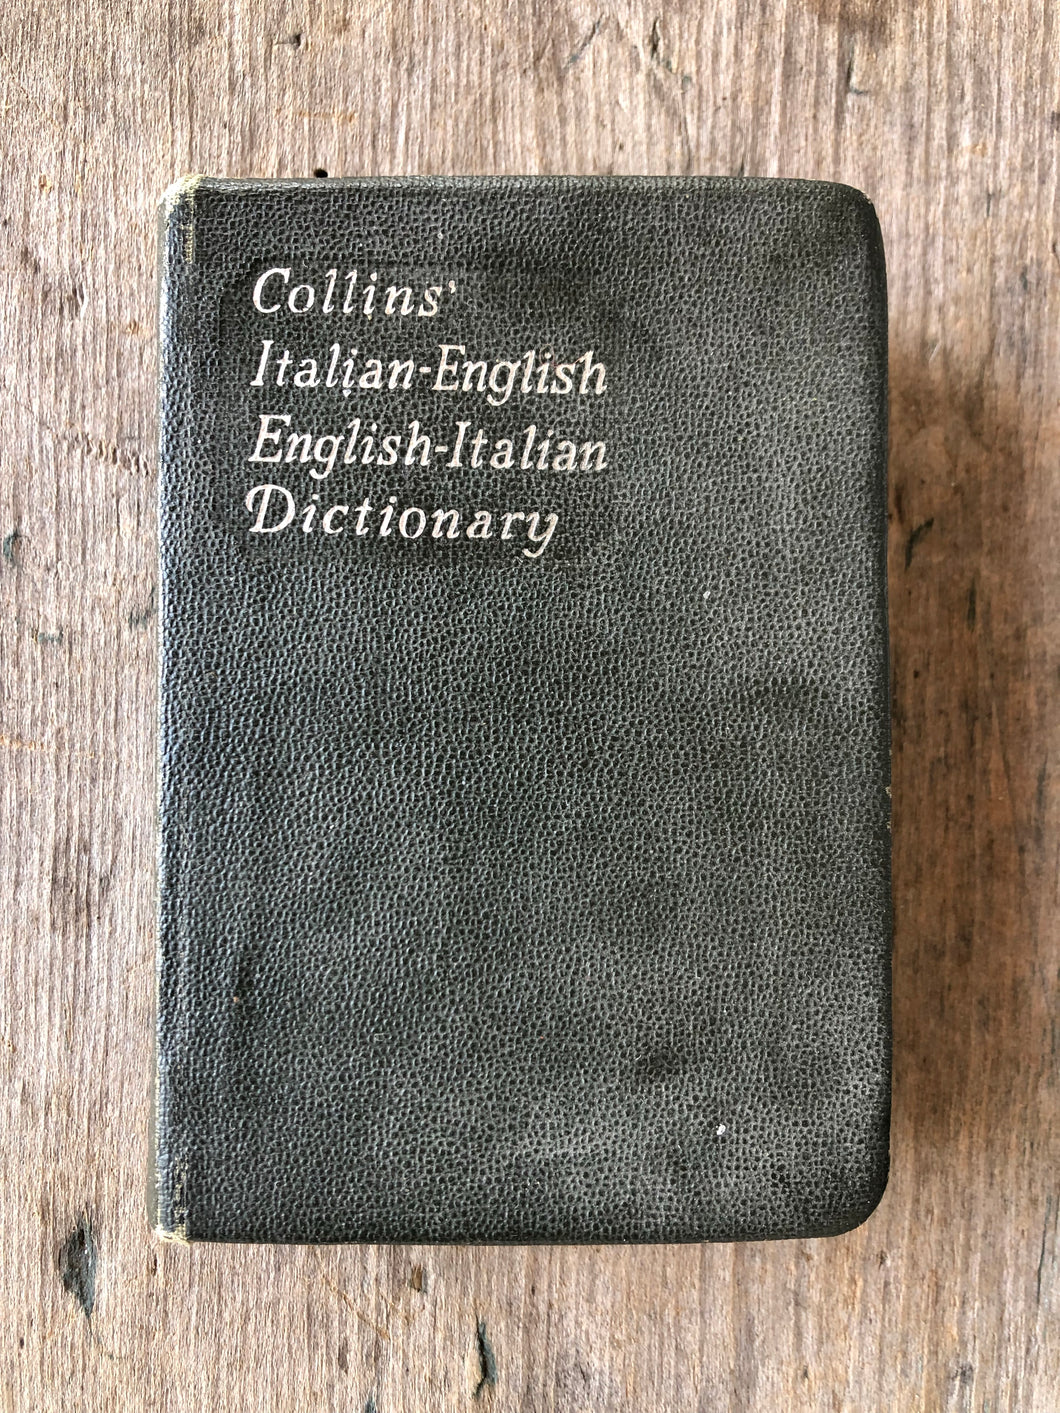 Collins Gem Dictionary: Italian - English, English - Italian. By Isopel May